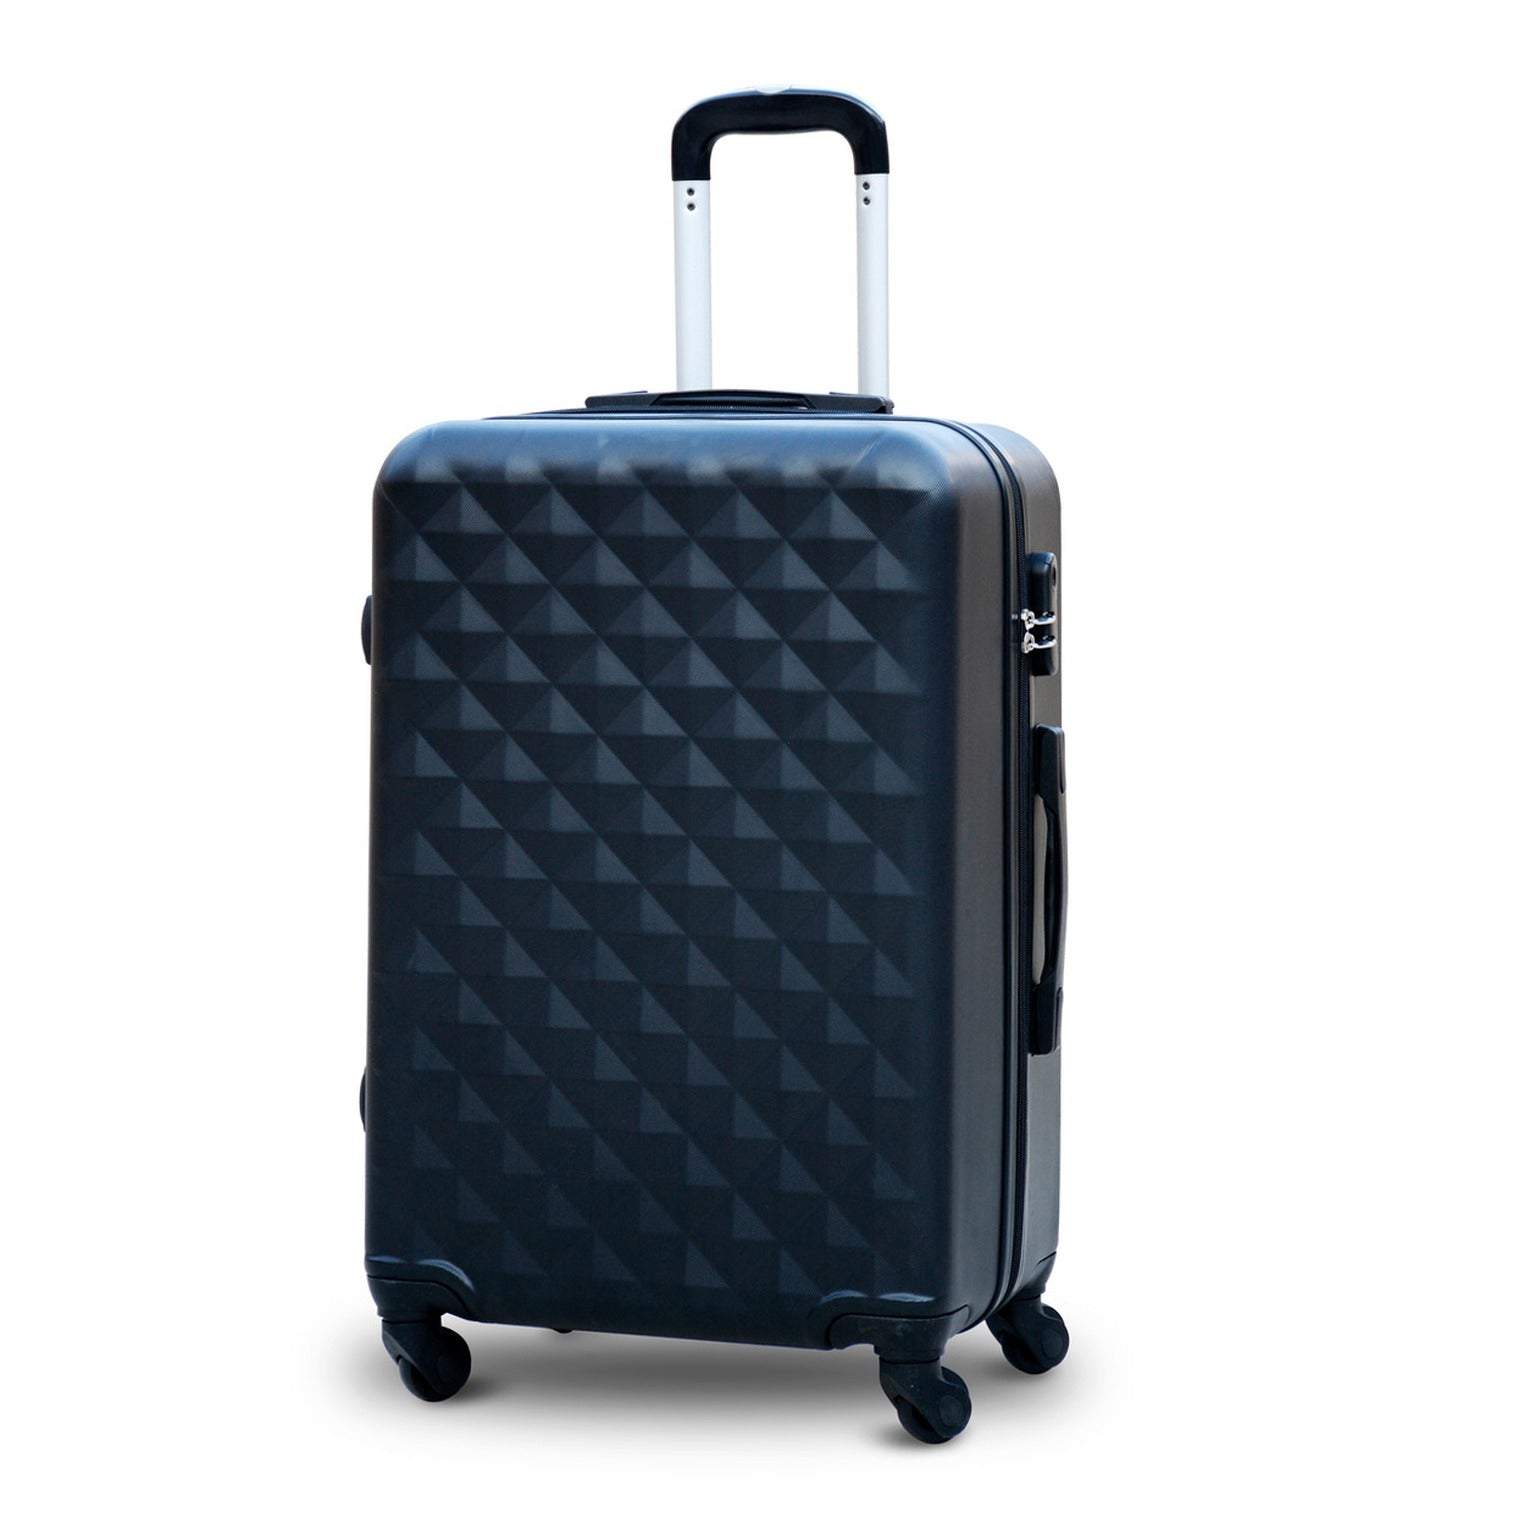 20" Black Diamond Cut ABS Lightweight Luggage Bag With Spinner Wheel